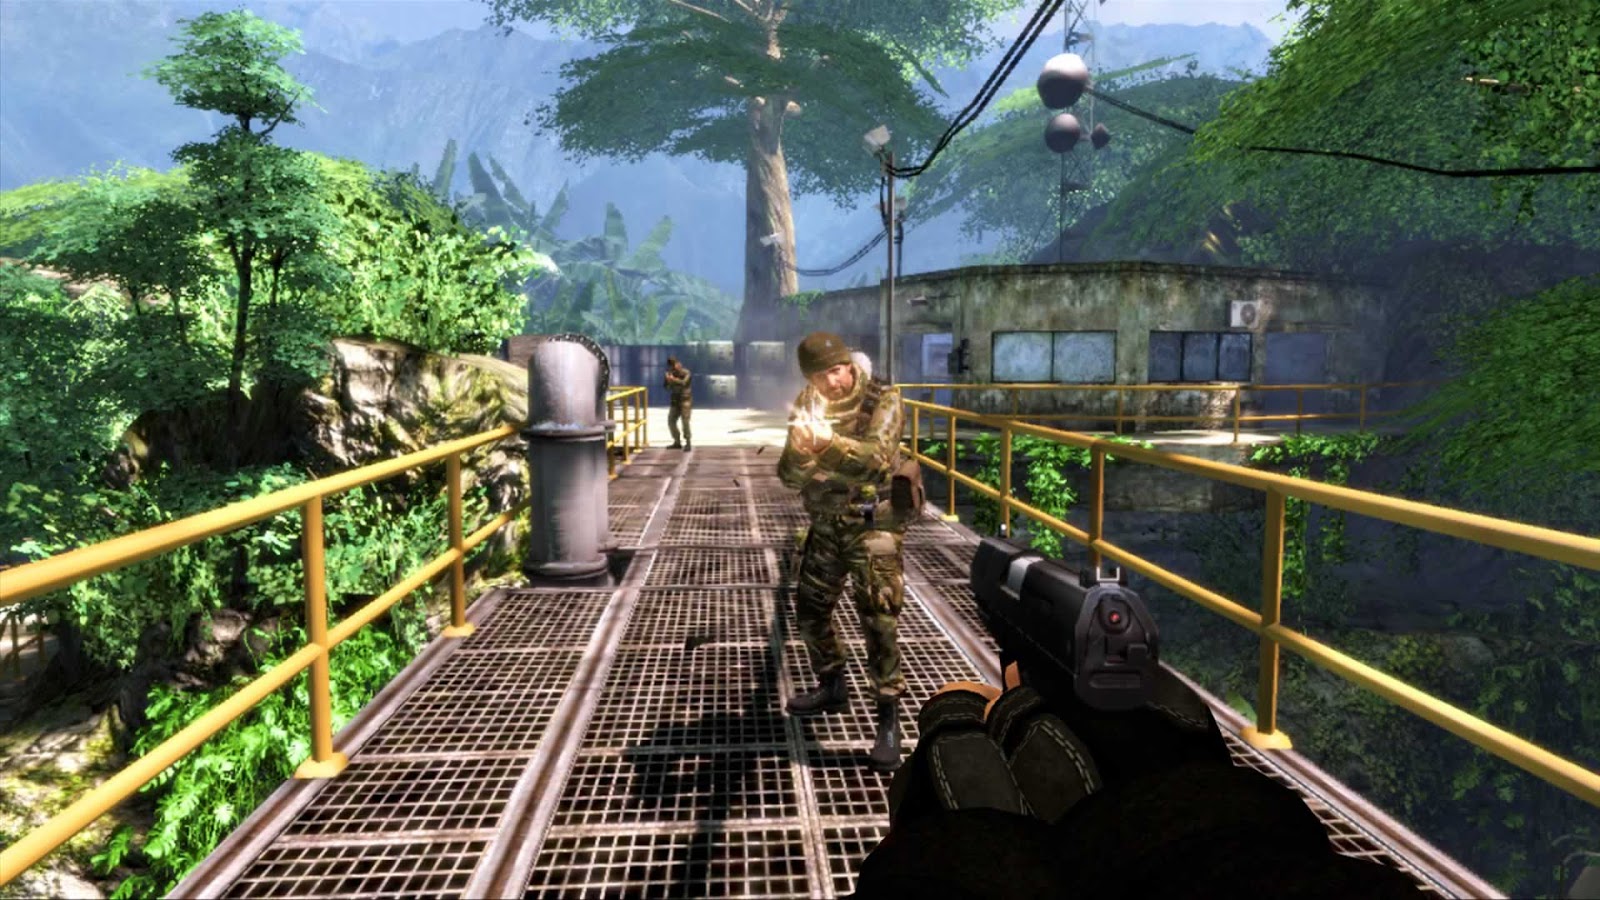 GoldenEye 007: Reloaded Gameplay HD walkthrough stealth game